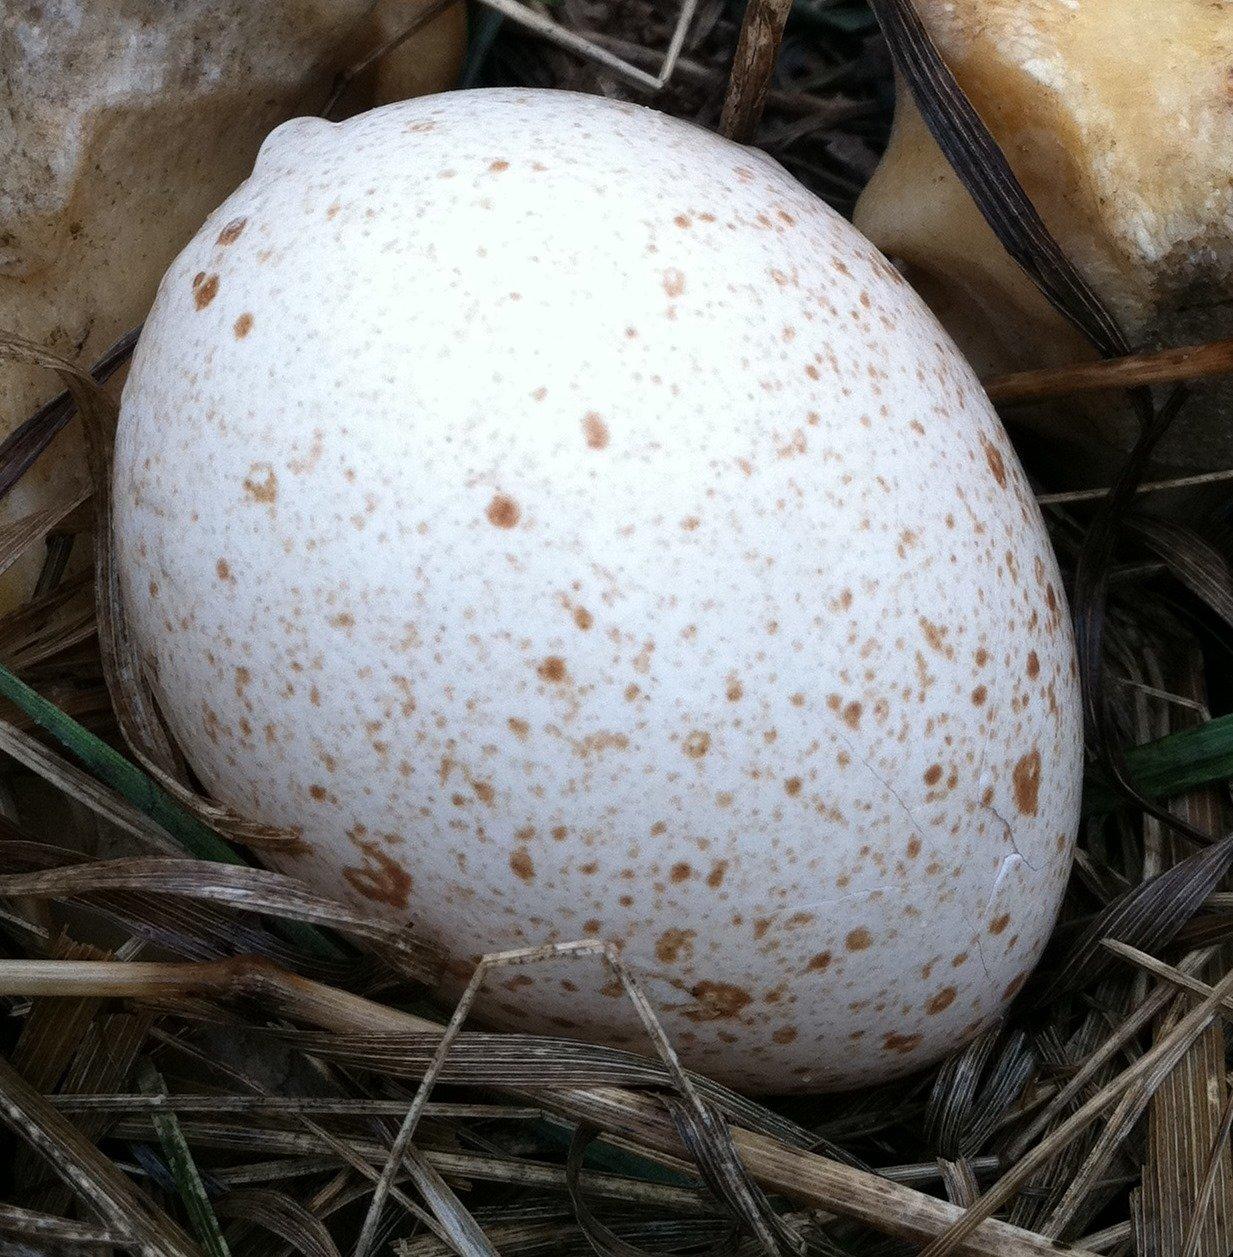 Wild turkey egg. (Steve Hickoff photo)